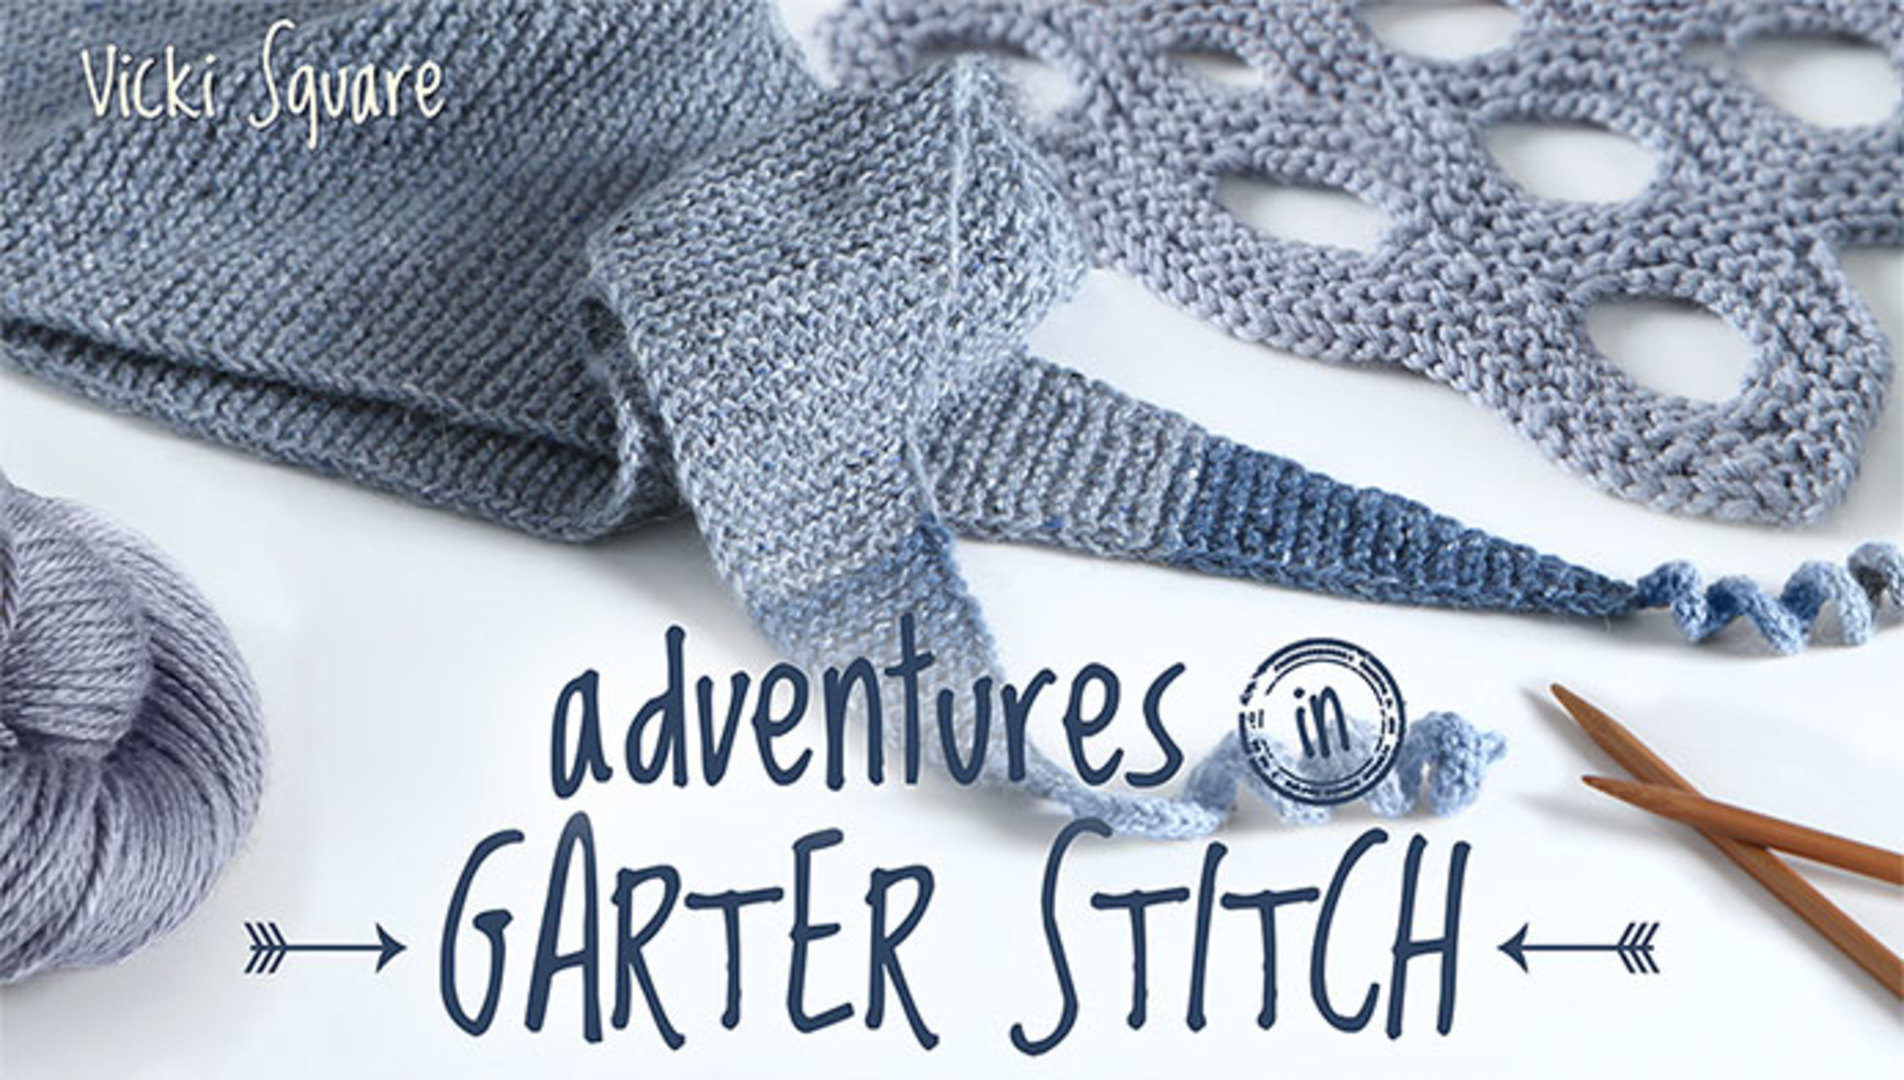 Garter stitch examples